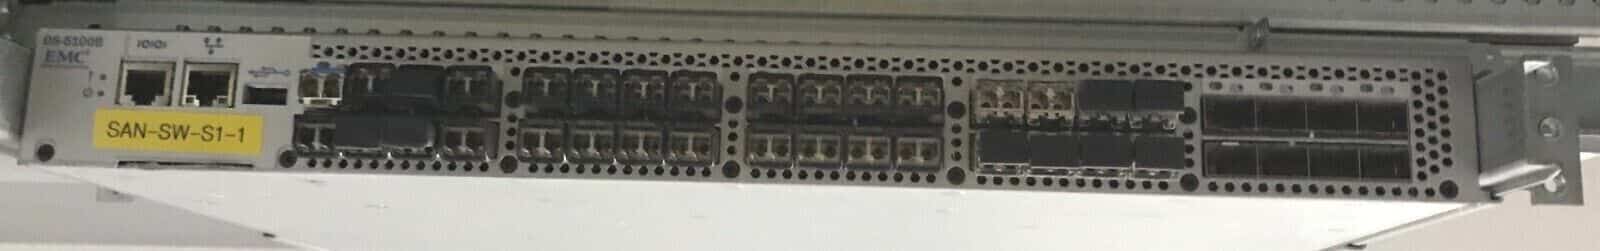 EMC-Brocade-DS-5100B-40-Port-8Gb-Fibre-Channel-Switch-INCL-SFPS-Rack-175346898331.jpg